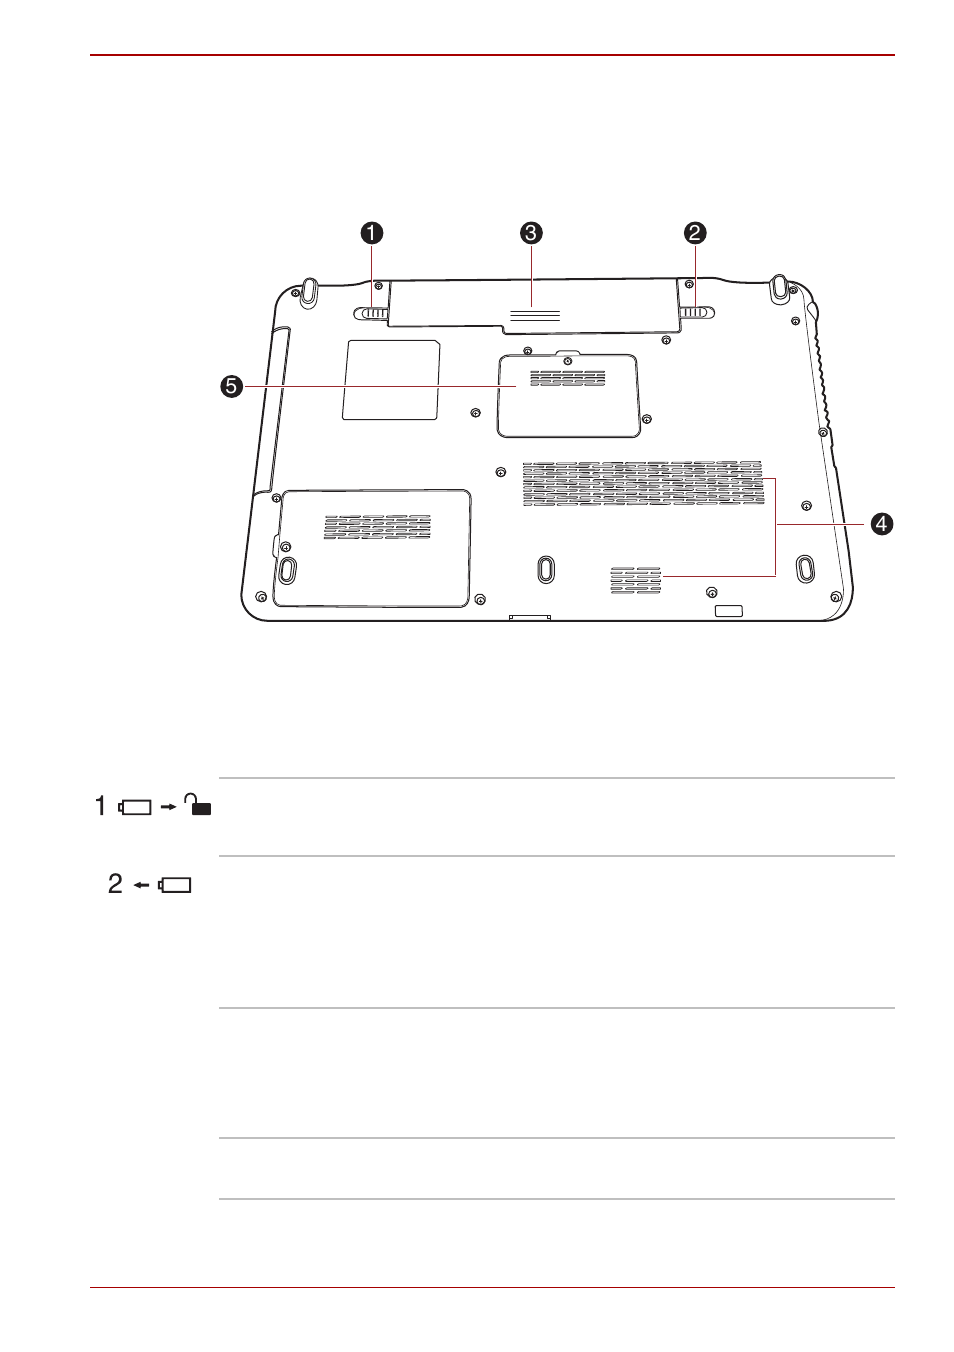 Cara inferior, Cara inferior -6 | Toshiba Satellite P755 User Manual | Page 44 / 232